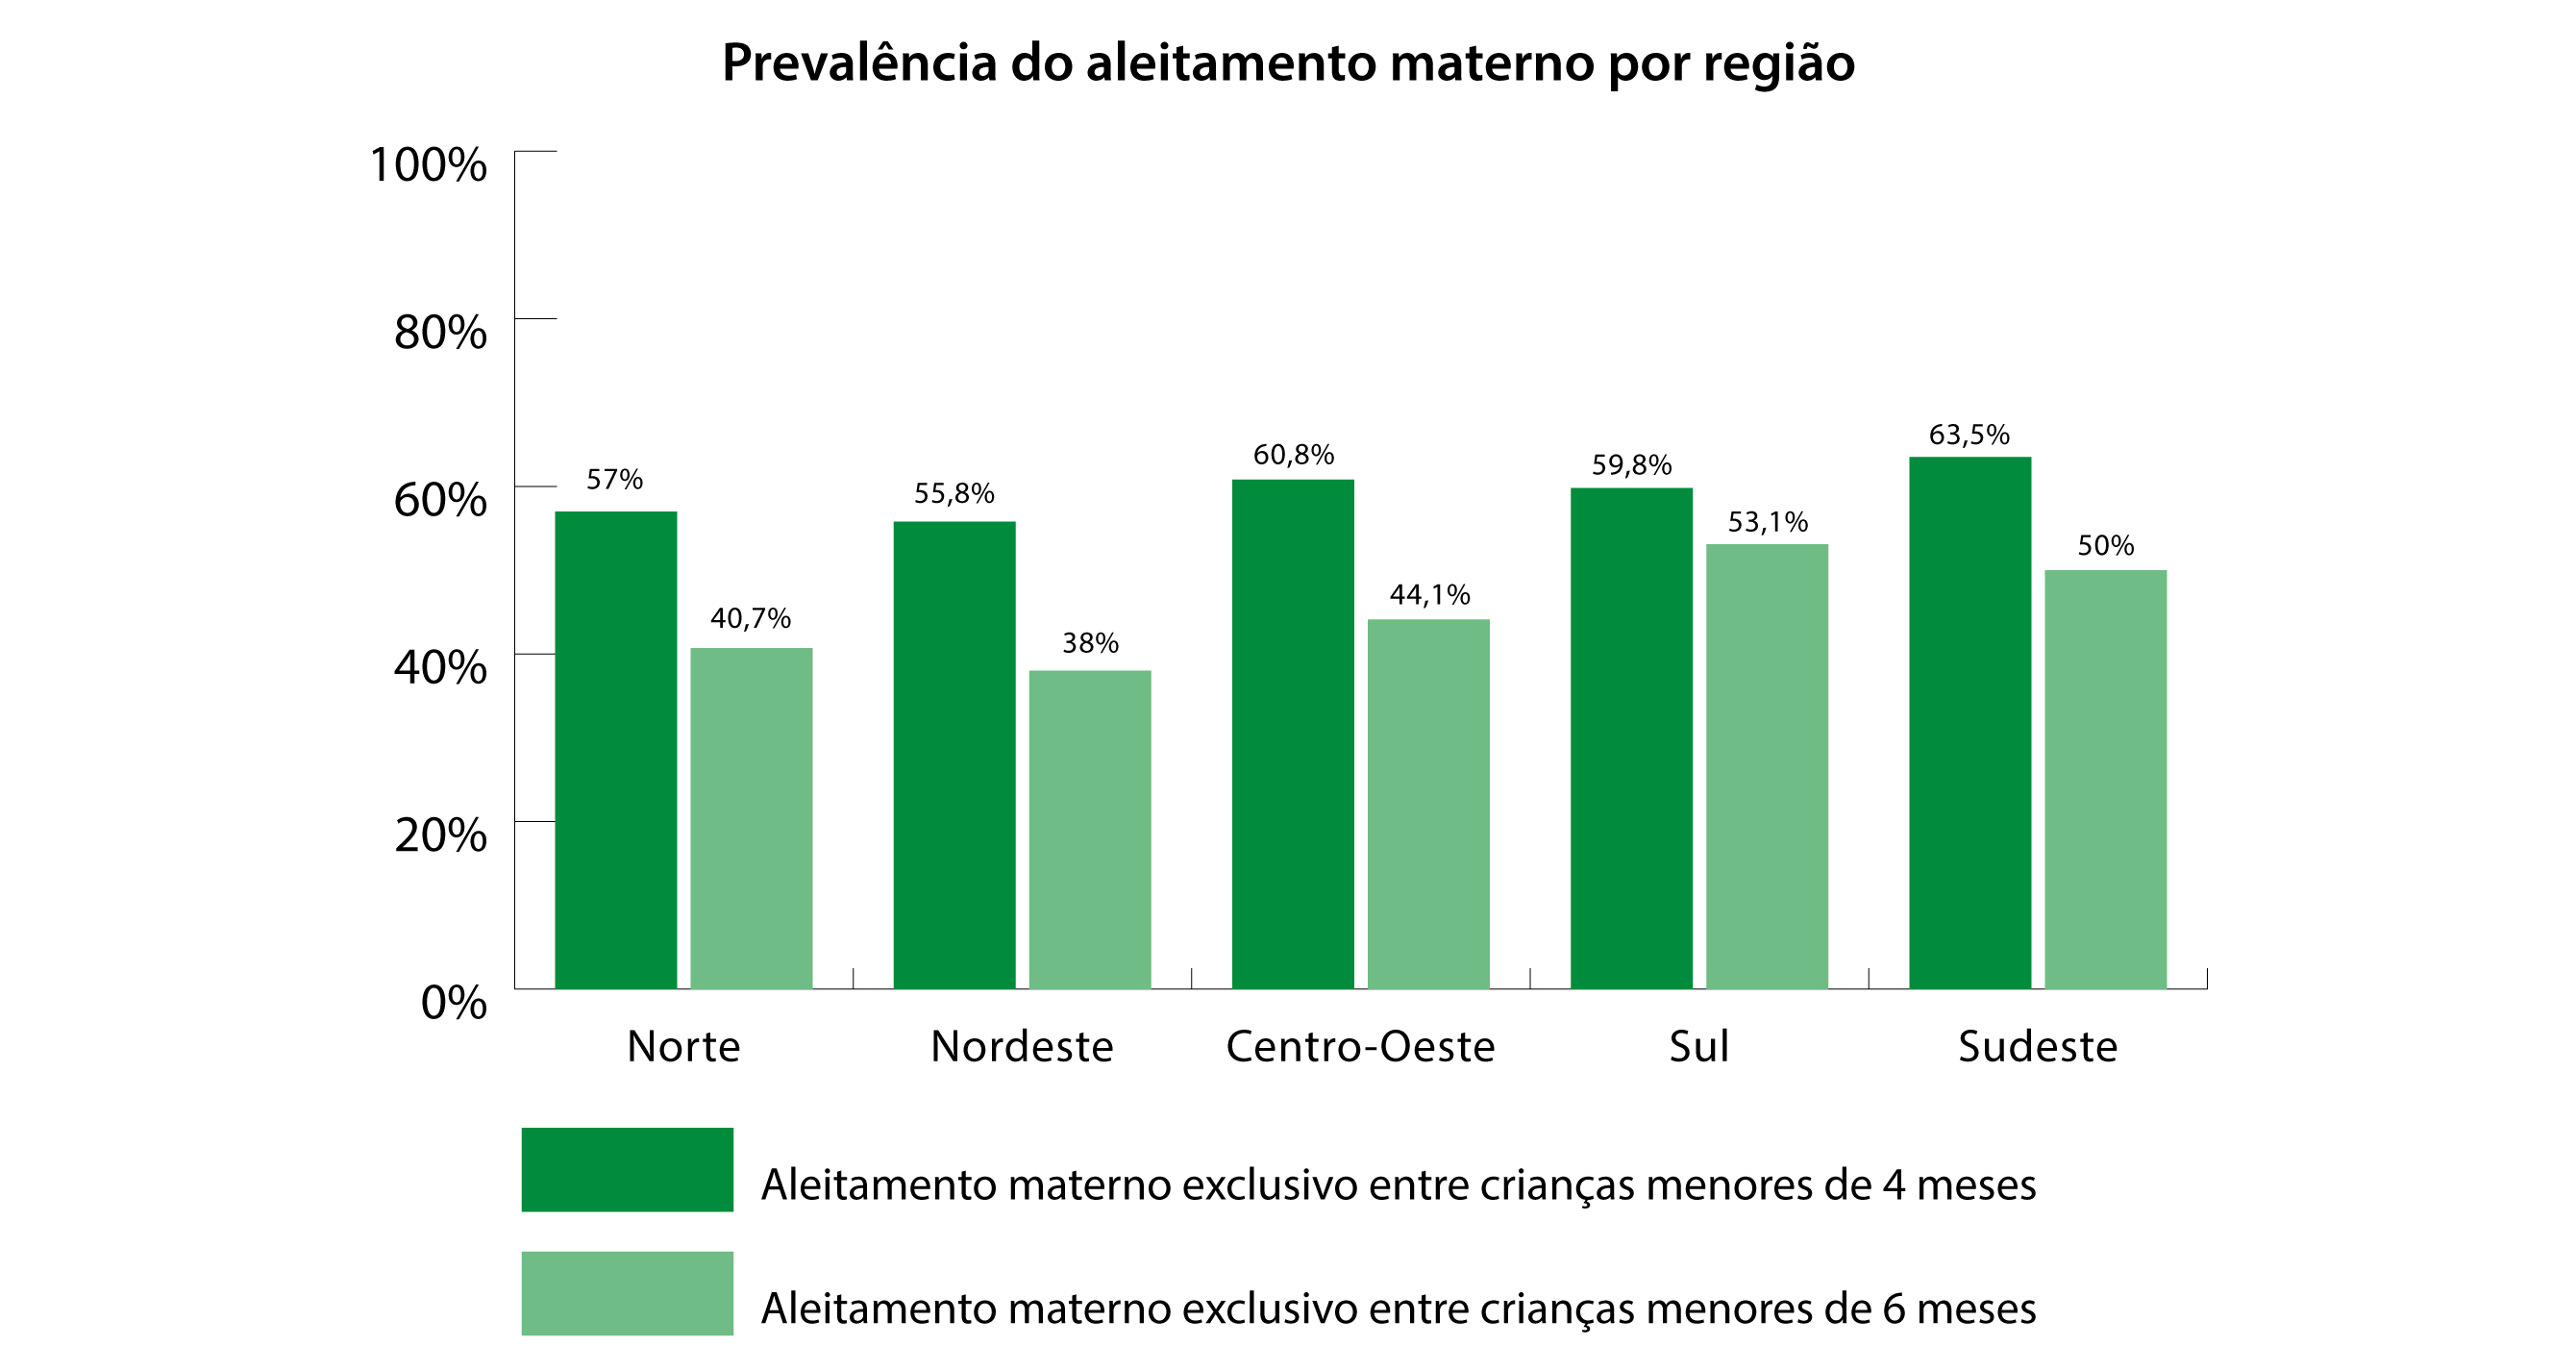 Menores de 4 meses  Norte: 57% Nordeste: 55,8%  Centro-Oeste: 60,8%  Sul: 59,8%  Sudeste: 63,5% Menores de 6 meses  Norte: 40,7%  Nordeste: 38% Centro-Oeste: 44,1% Sul: 53,1% Sudeste: 50%